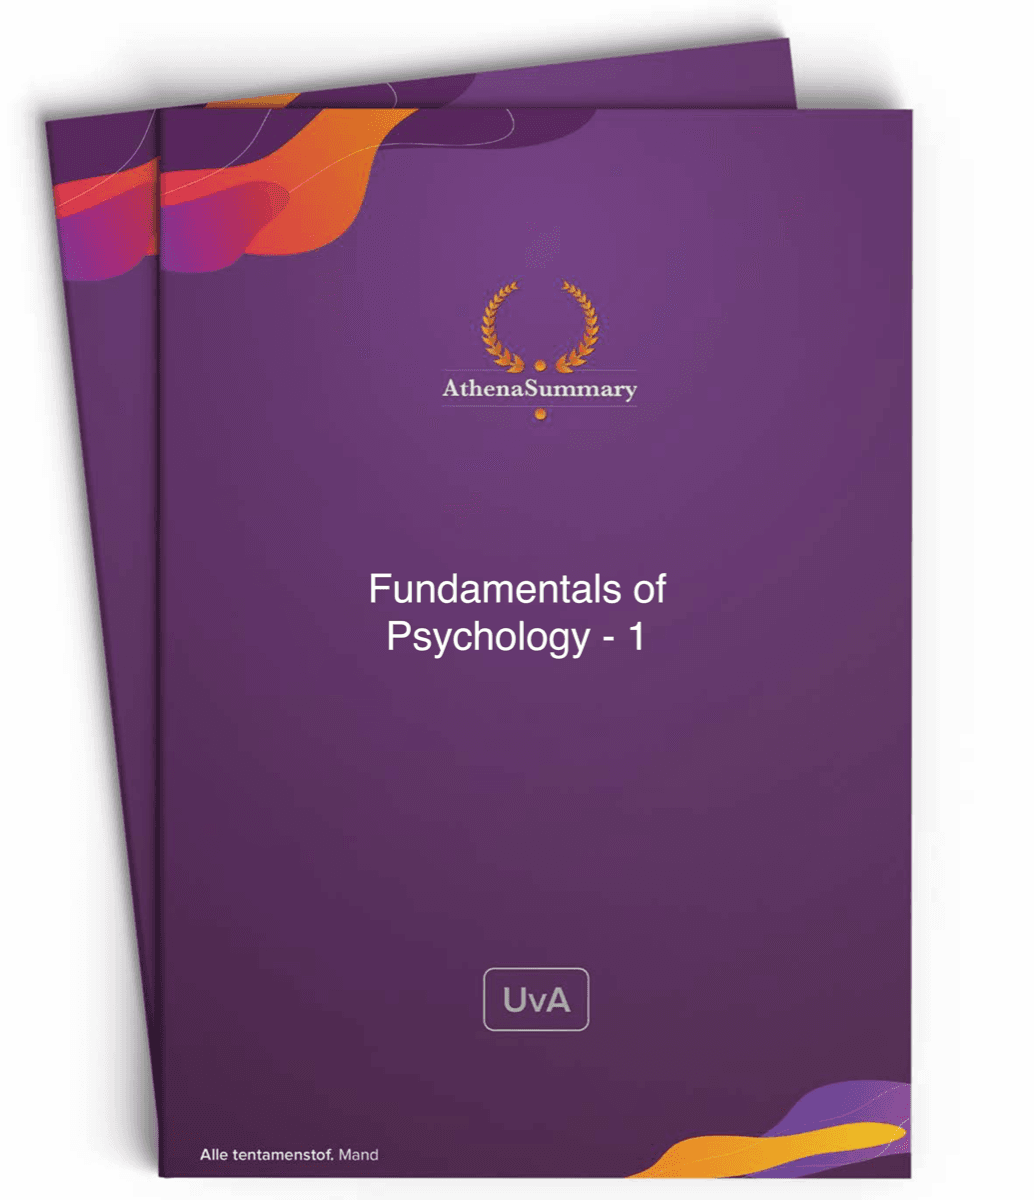 Literature Summary: Fundamentals of Psychology - 1